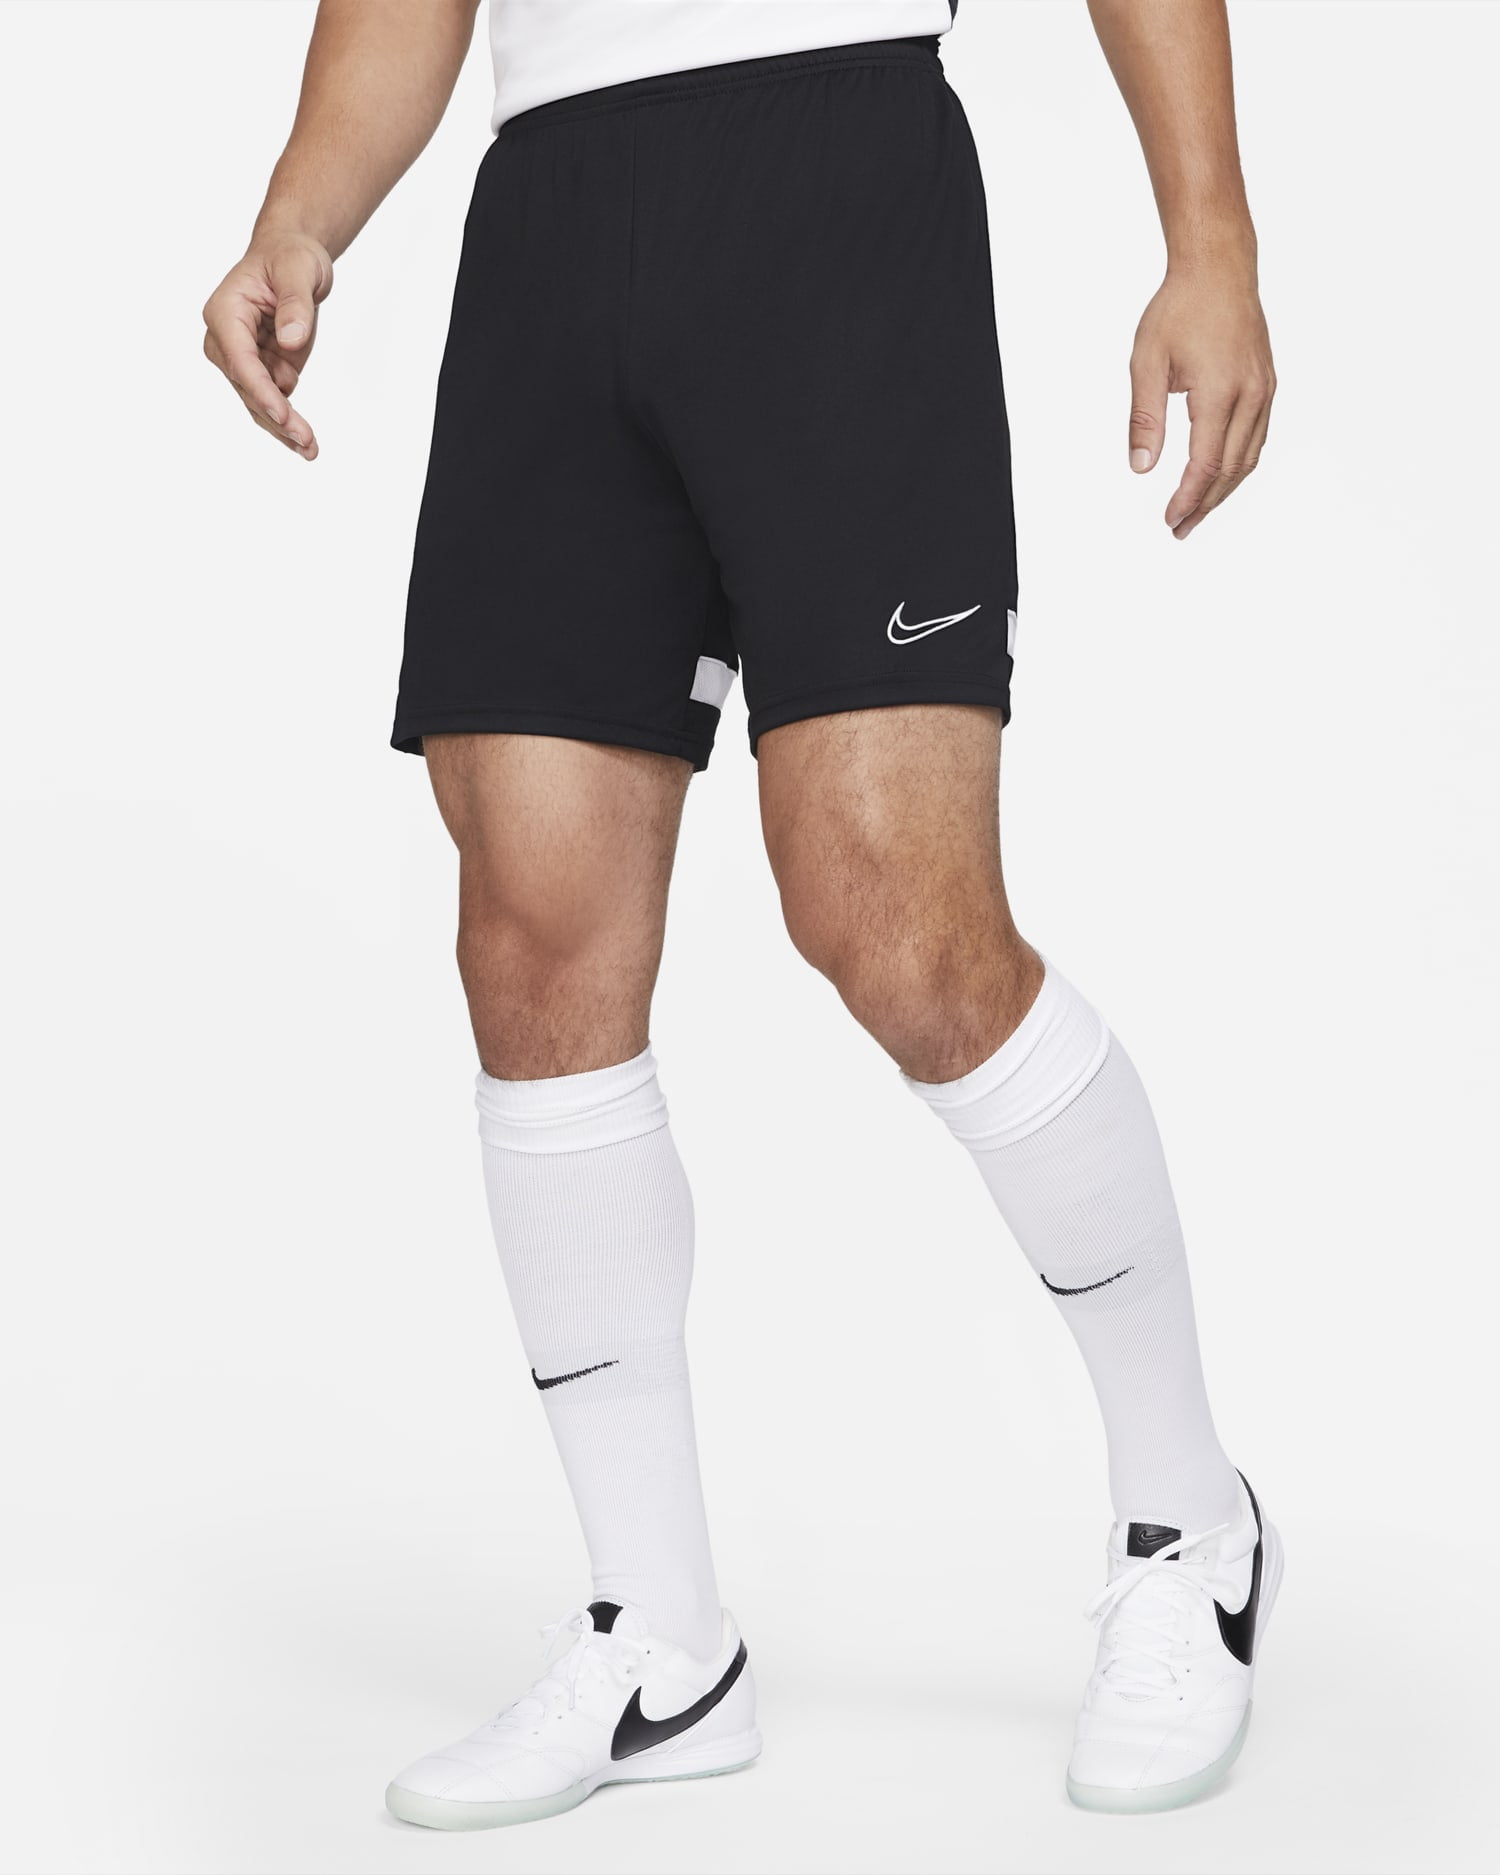 Gematigd haar Uitbeelding Nike Dri-FIT Academy Men's Knit Soccer Shorts, Black/White, XL - Walmart.com